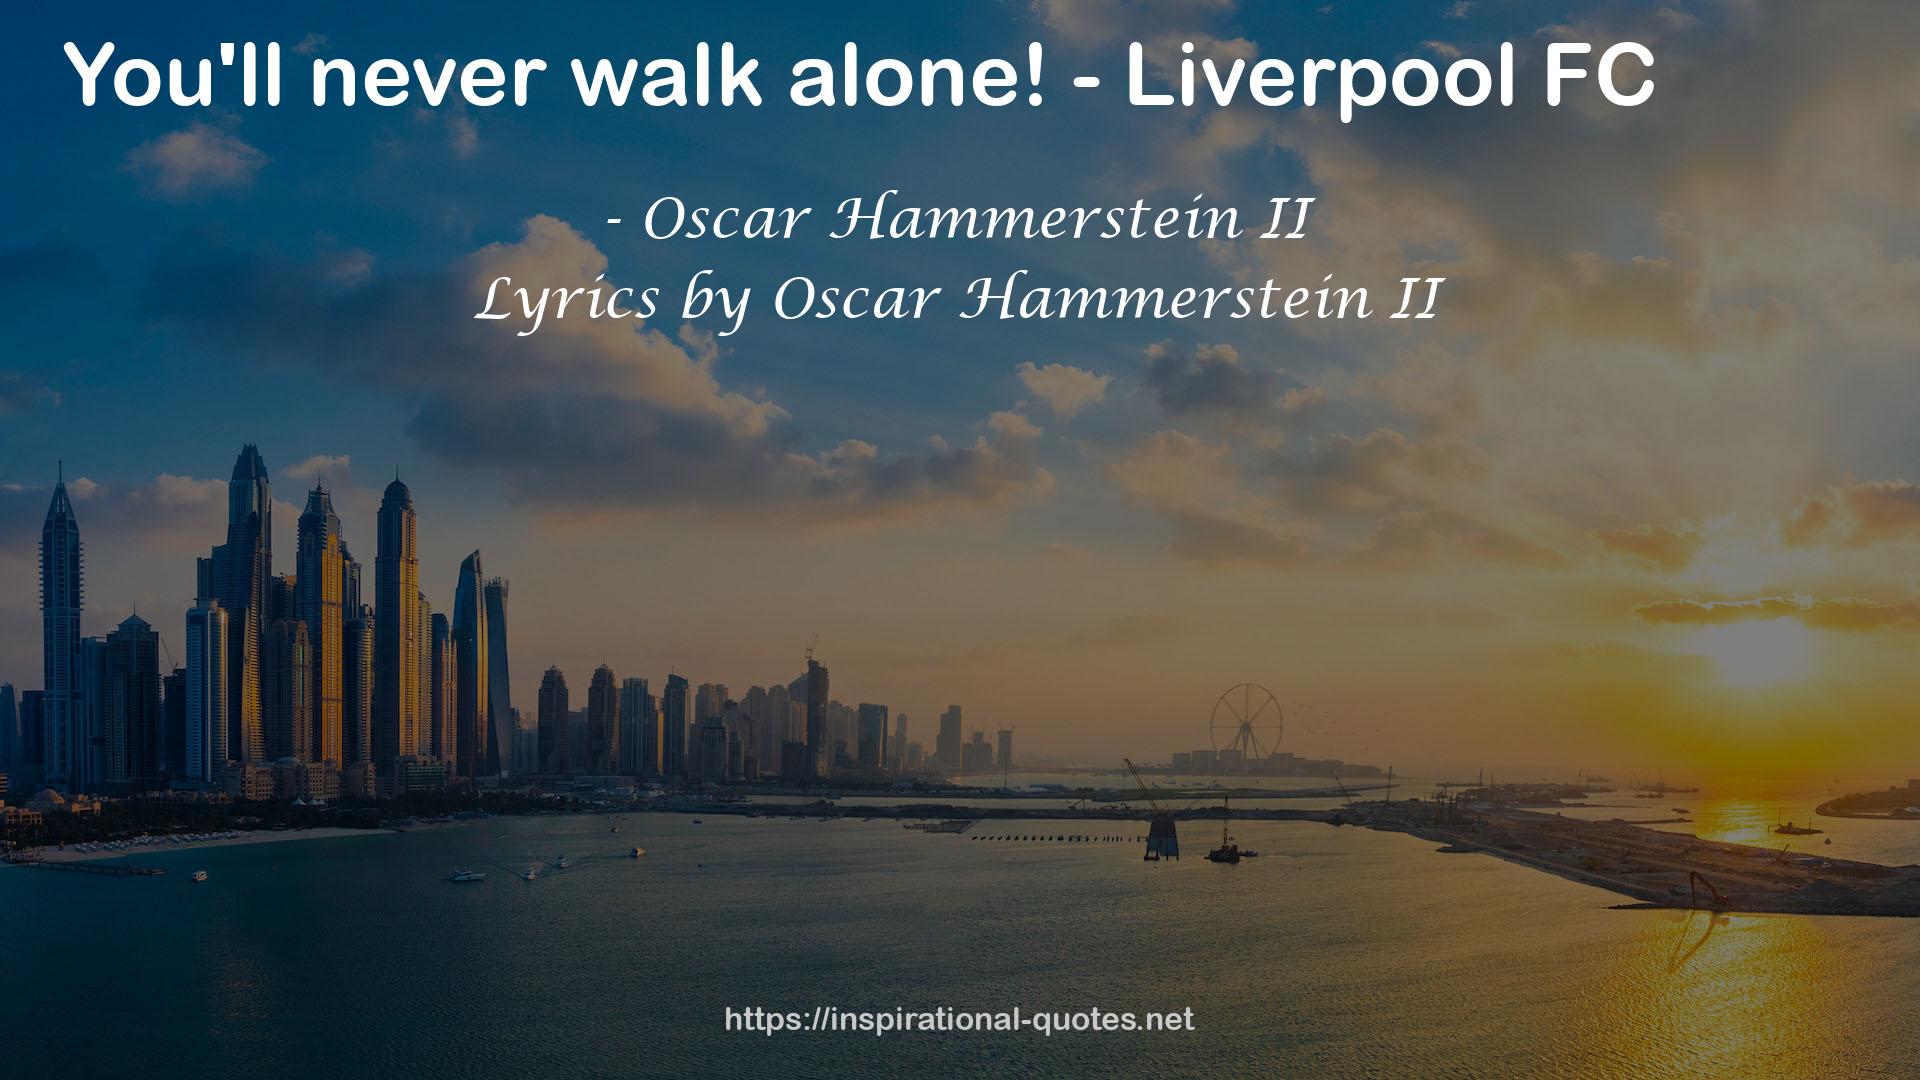 Lyrics by Oscar Hammerstein II QUOTES